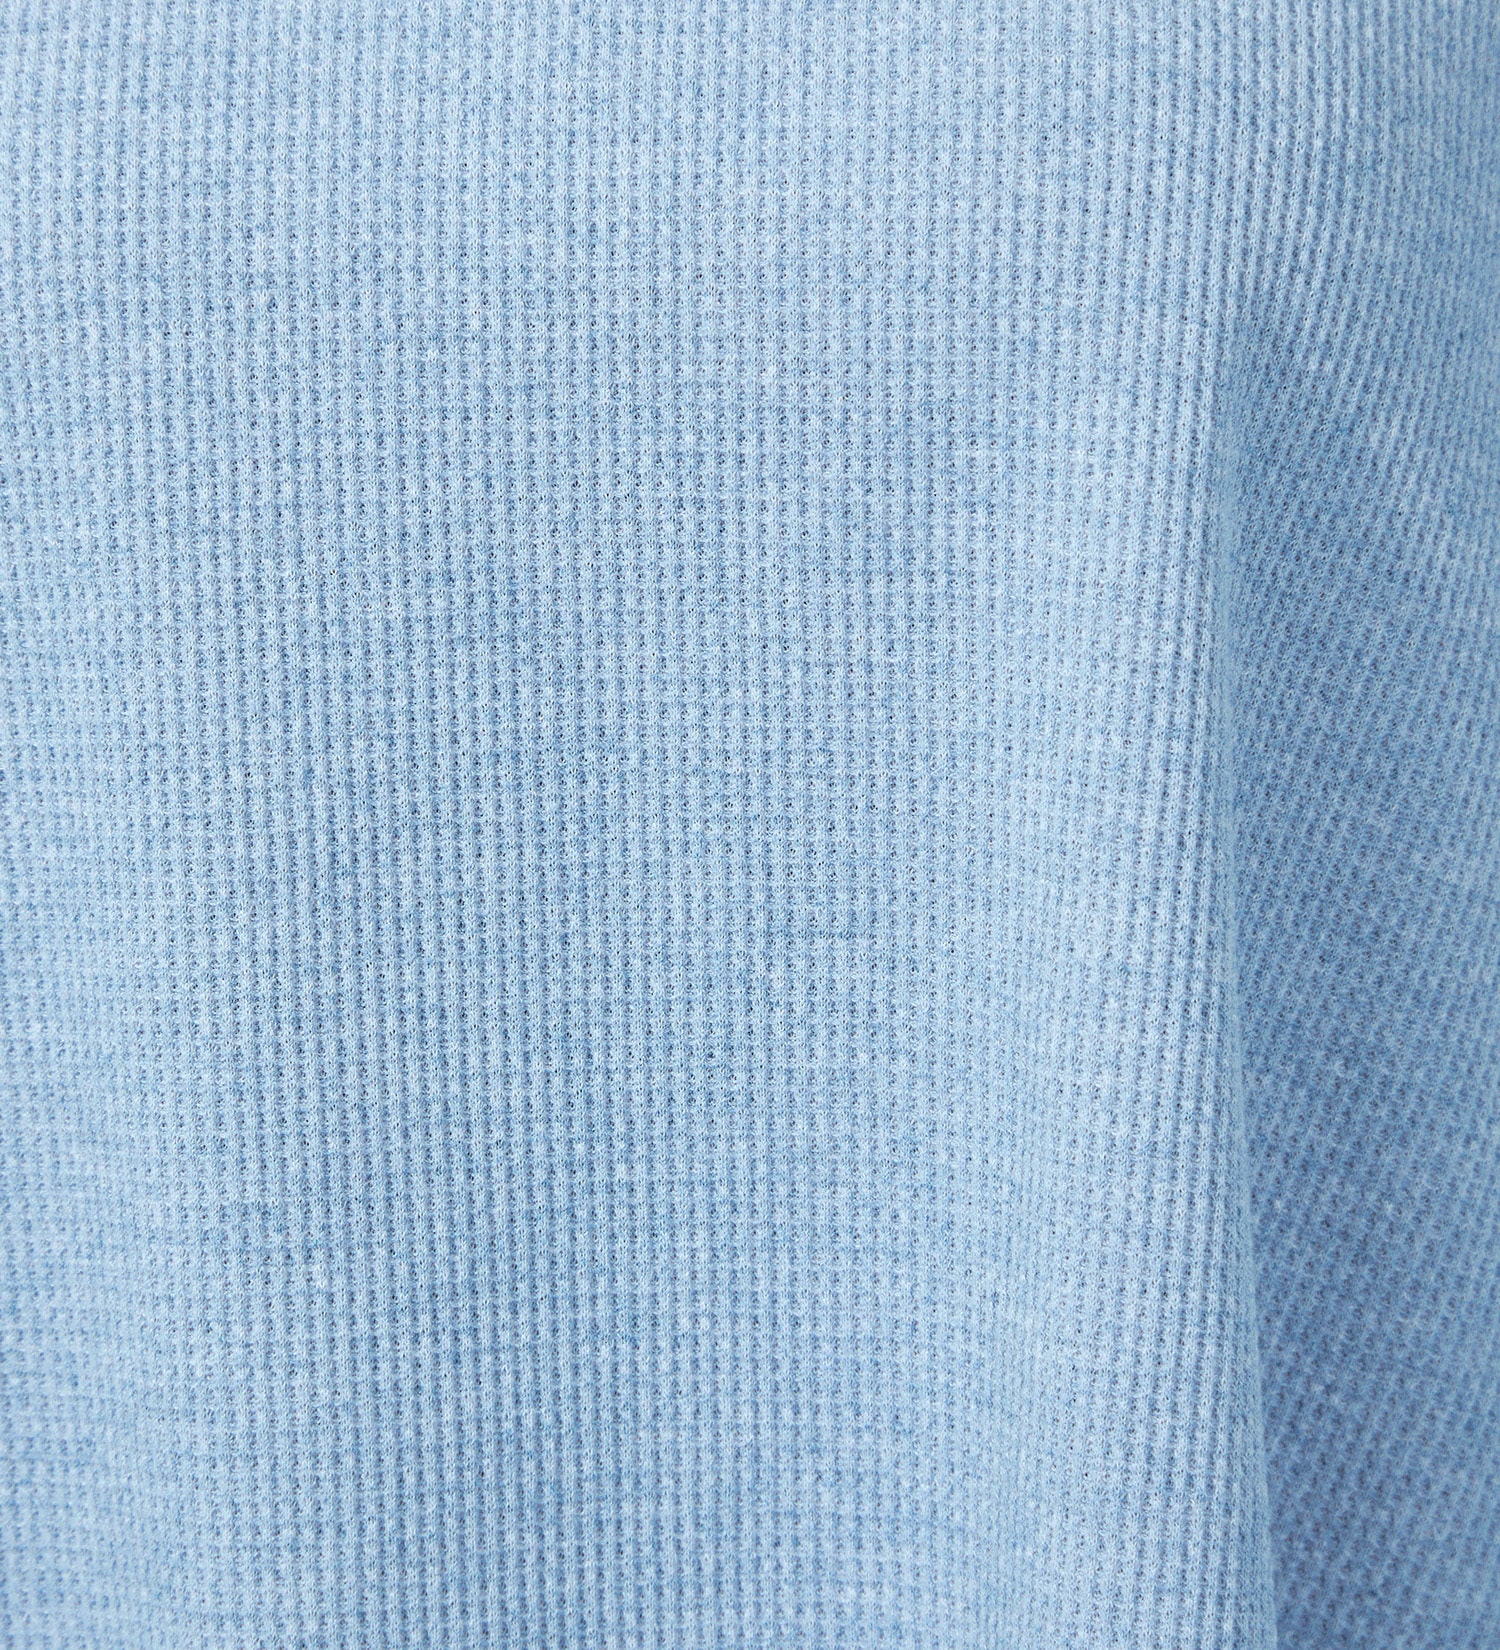 SOMETHING(サムシング)のSOMETHING COOL バックタック半袖Tシャツ【涼】|トップス/Tシャツ/カットソー/レディース|ライトブルー